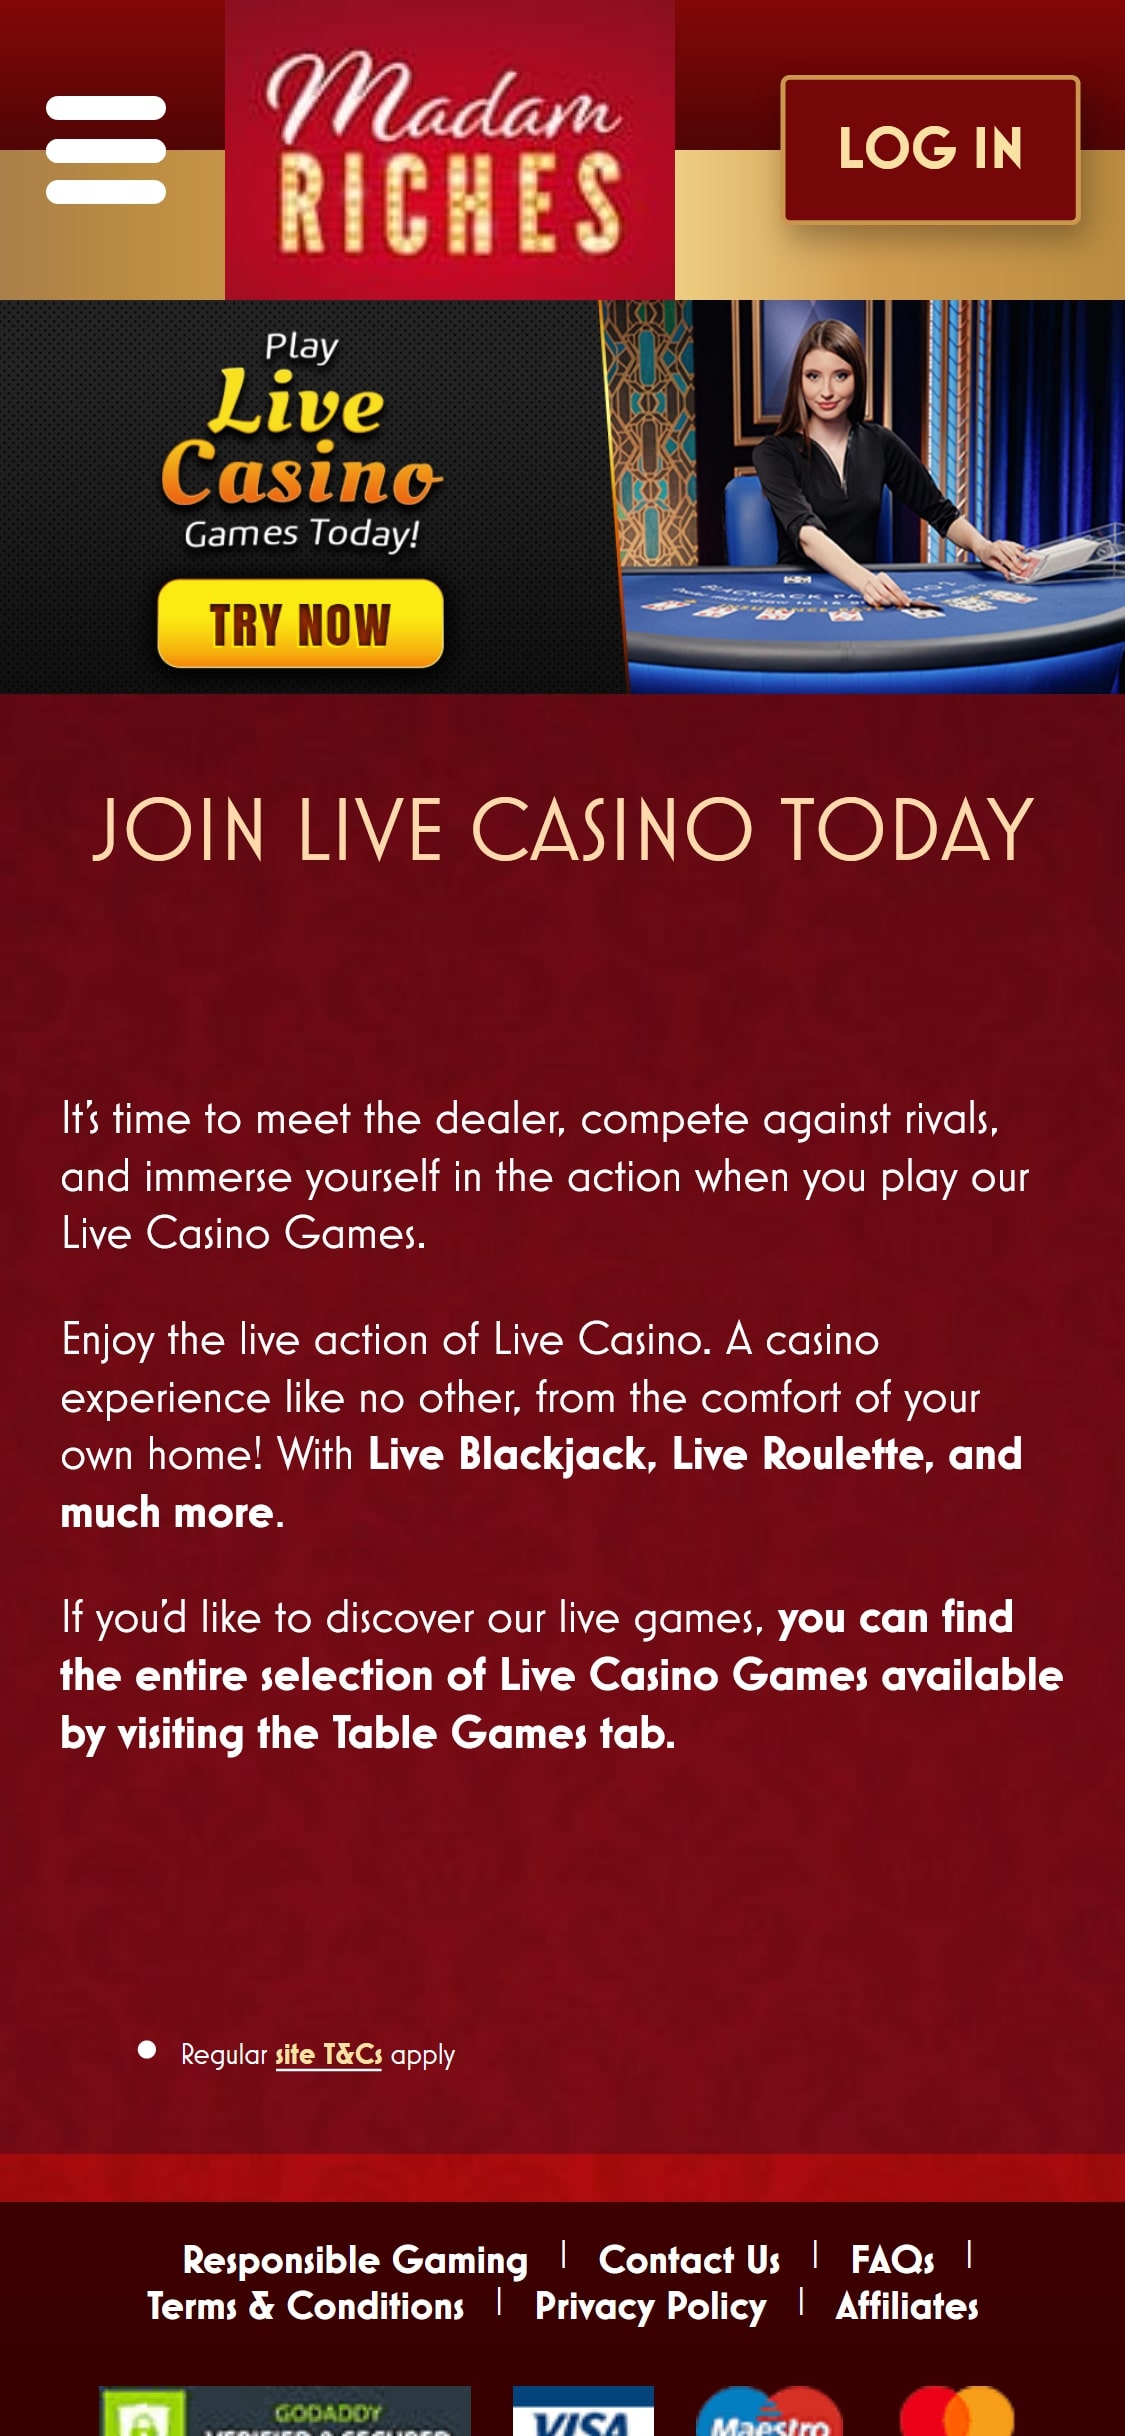 Madam Riches Casino Mobile Live Dealer Games Review